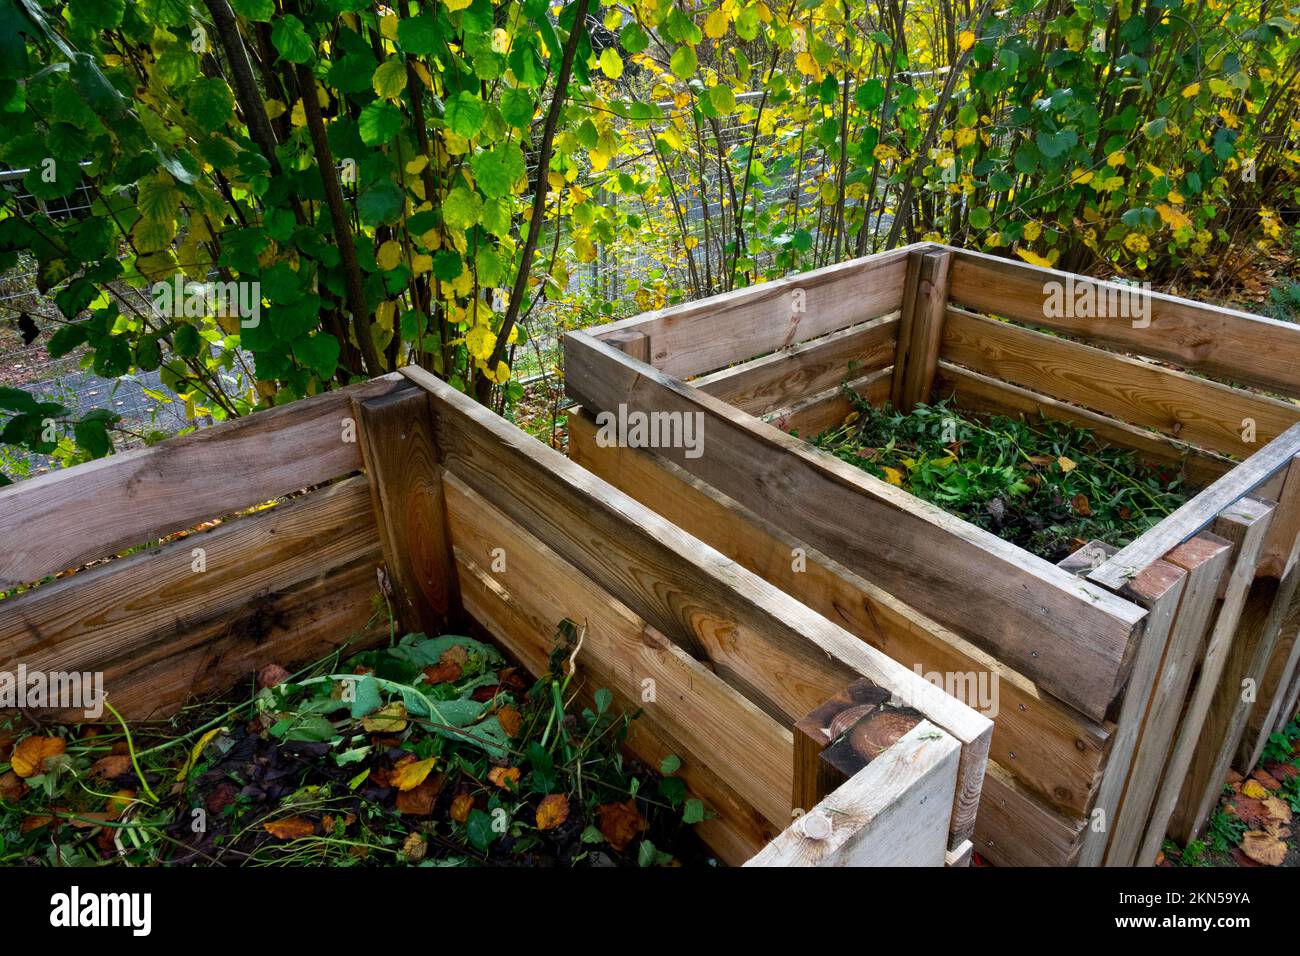 Allot garden composter outdoors, two wooden composters in an autumn garden make biologically humus compost box Stock Photo